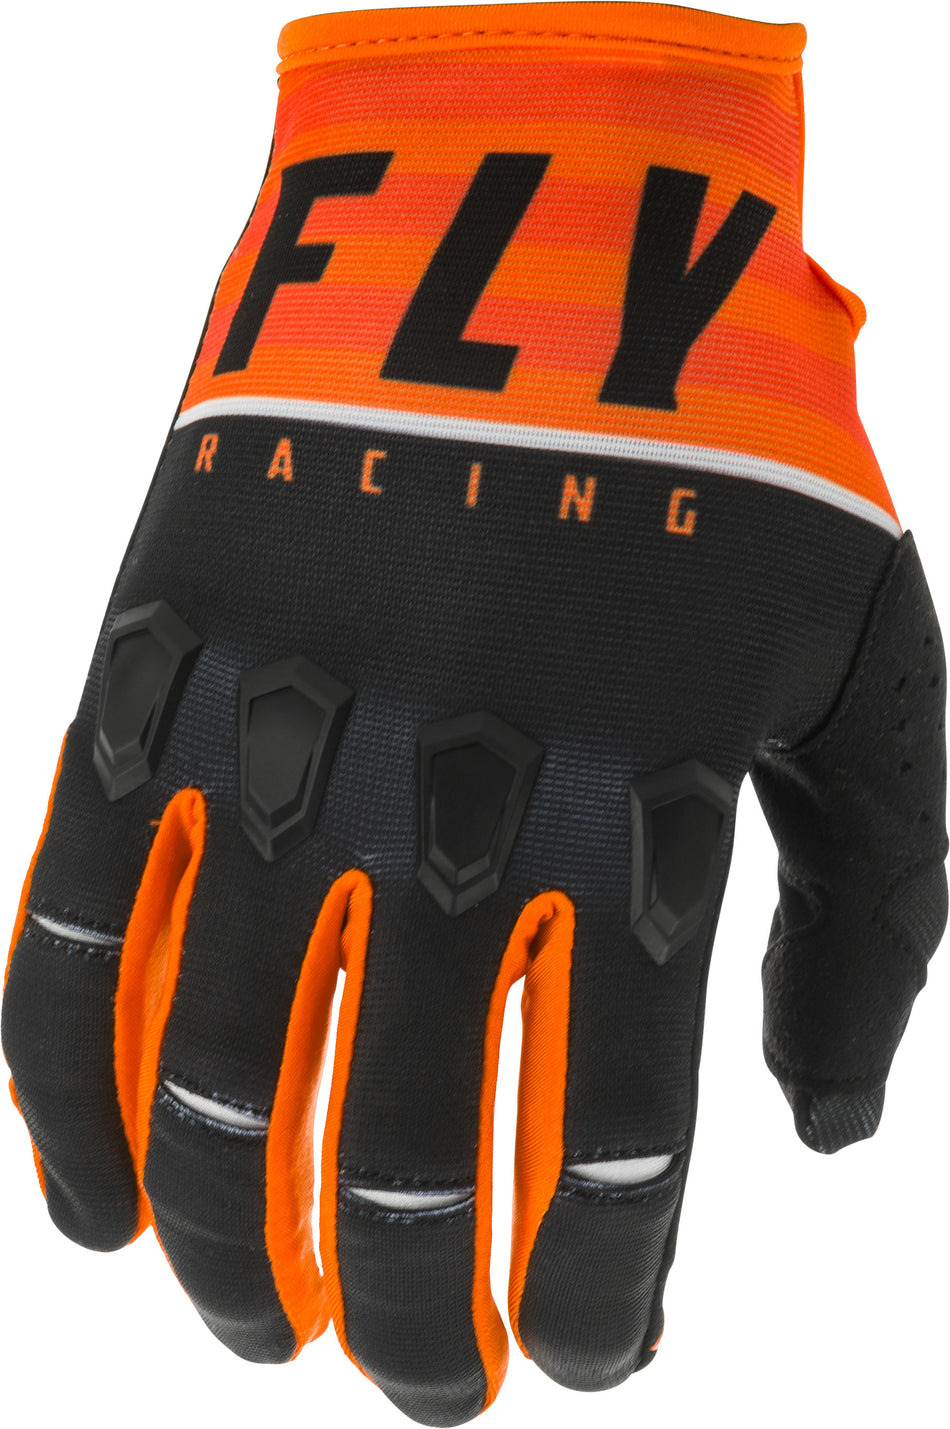 FLY RACING Kinetic K120 Gloves Orange/Black/White Sz 09 373-41709